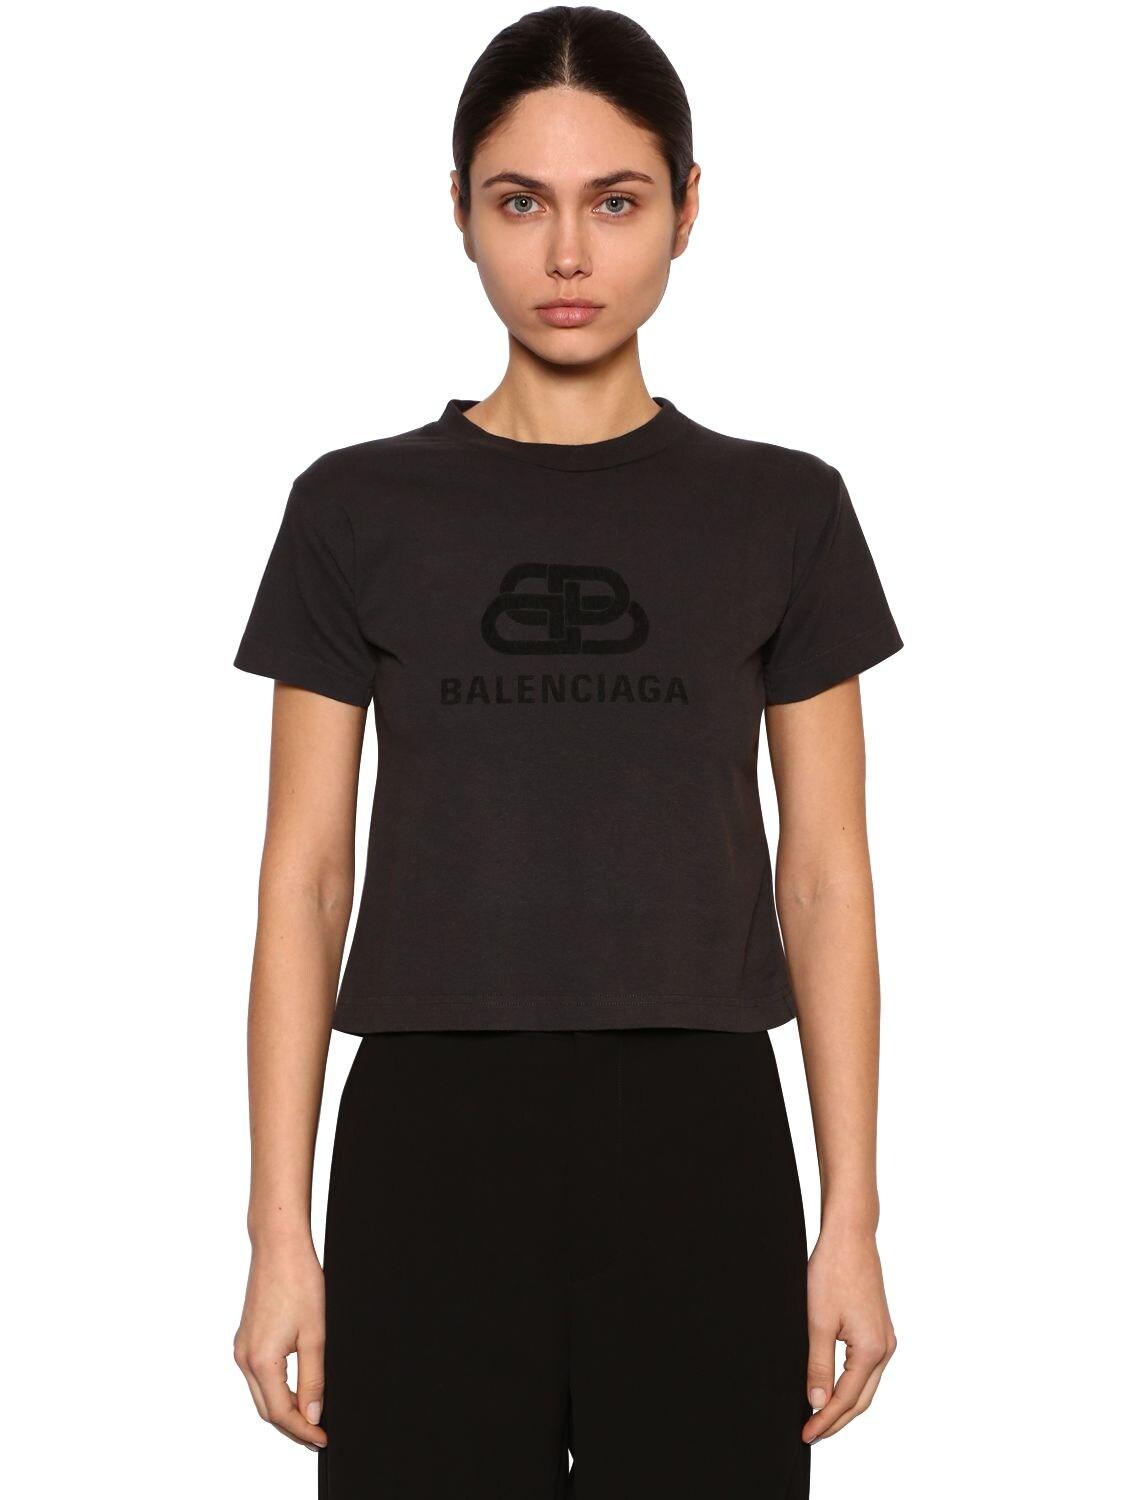 Balenciaga Cropped New Bb Logo Jersey T-shirt in Washed Black (Black